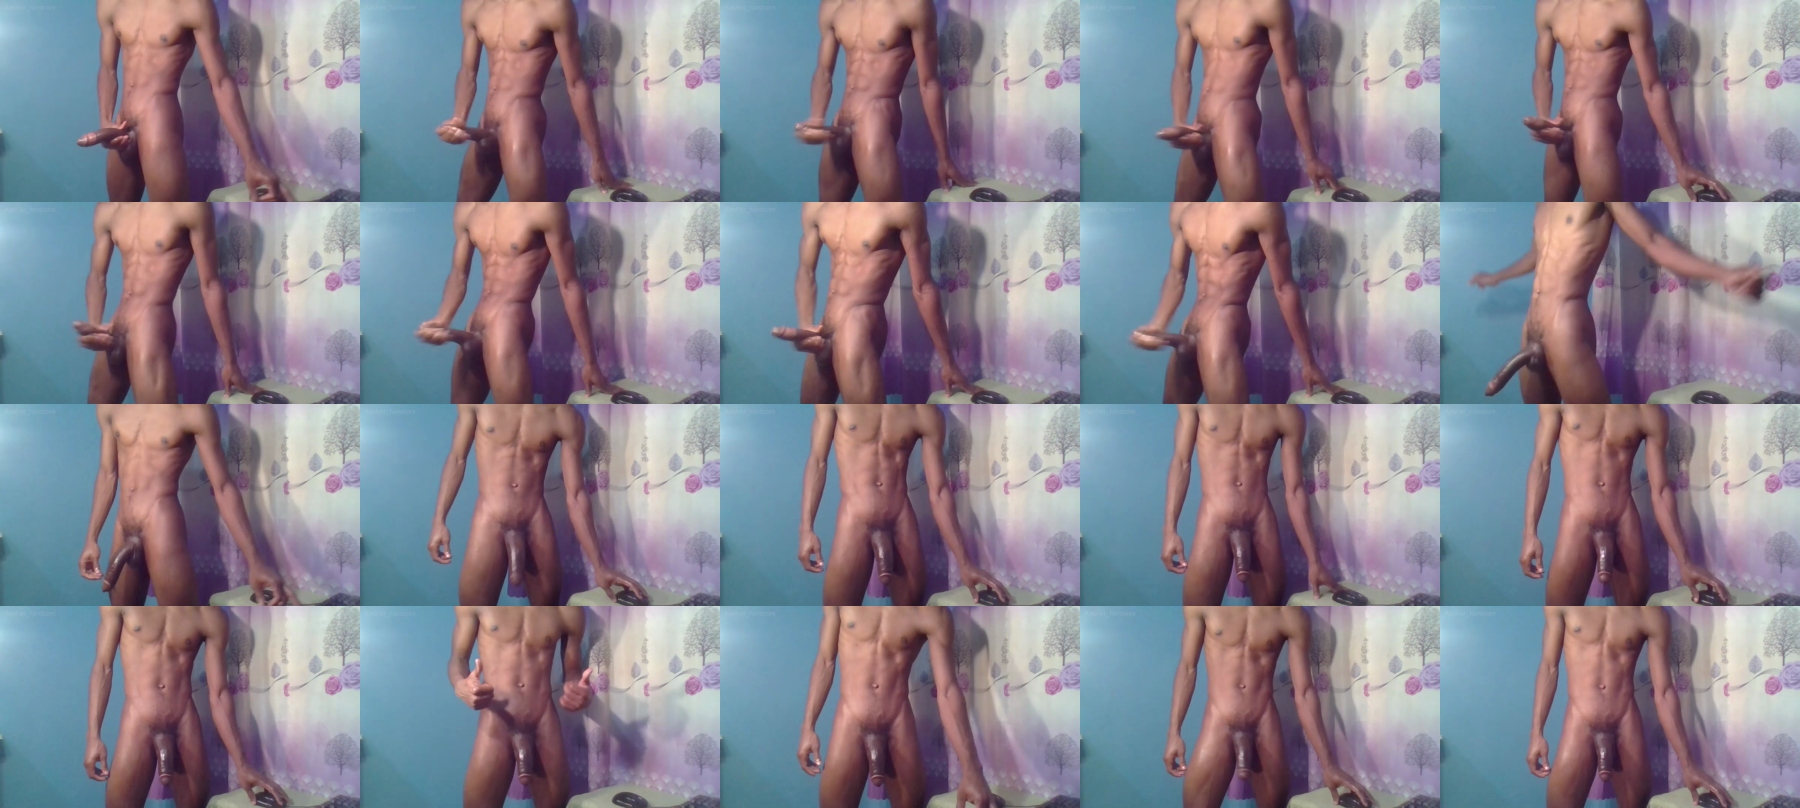 Aasher_Hardcore  09-10-2021 Male Nude